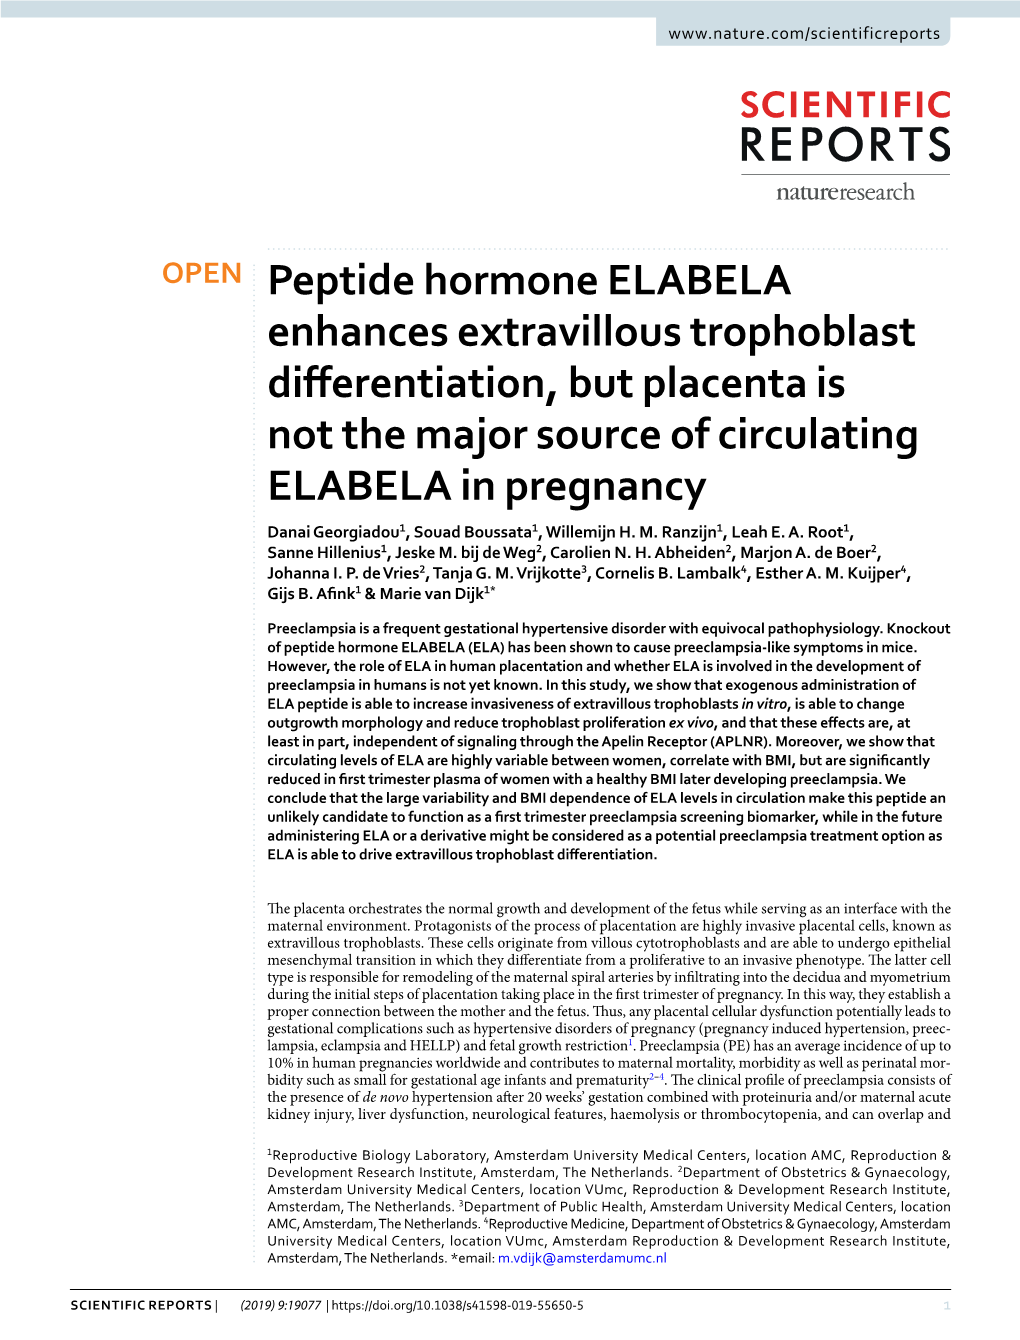 Peptide Hormone ELABELA Enhances Extravillous Trophoblast